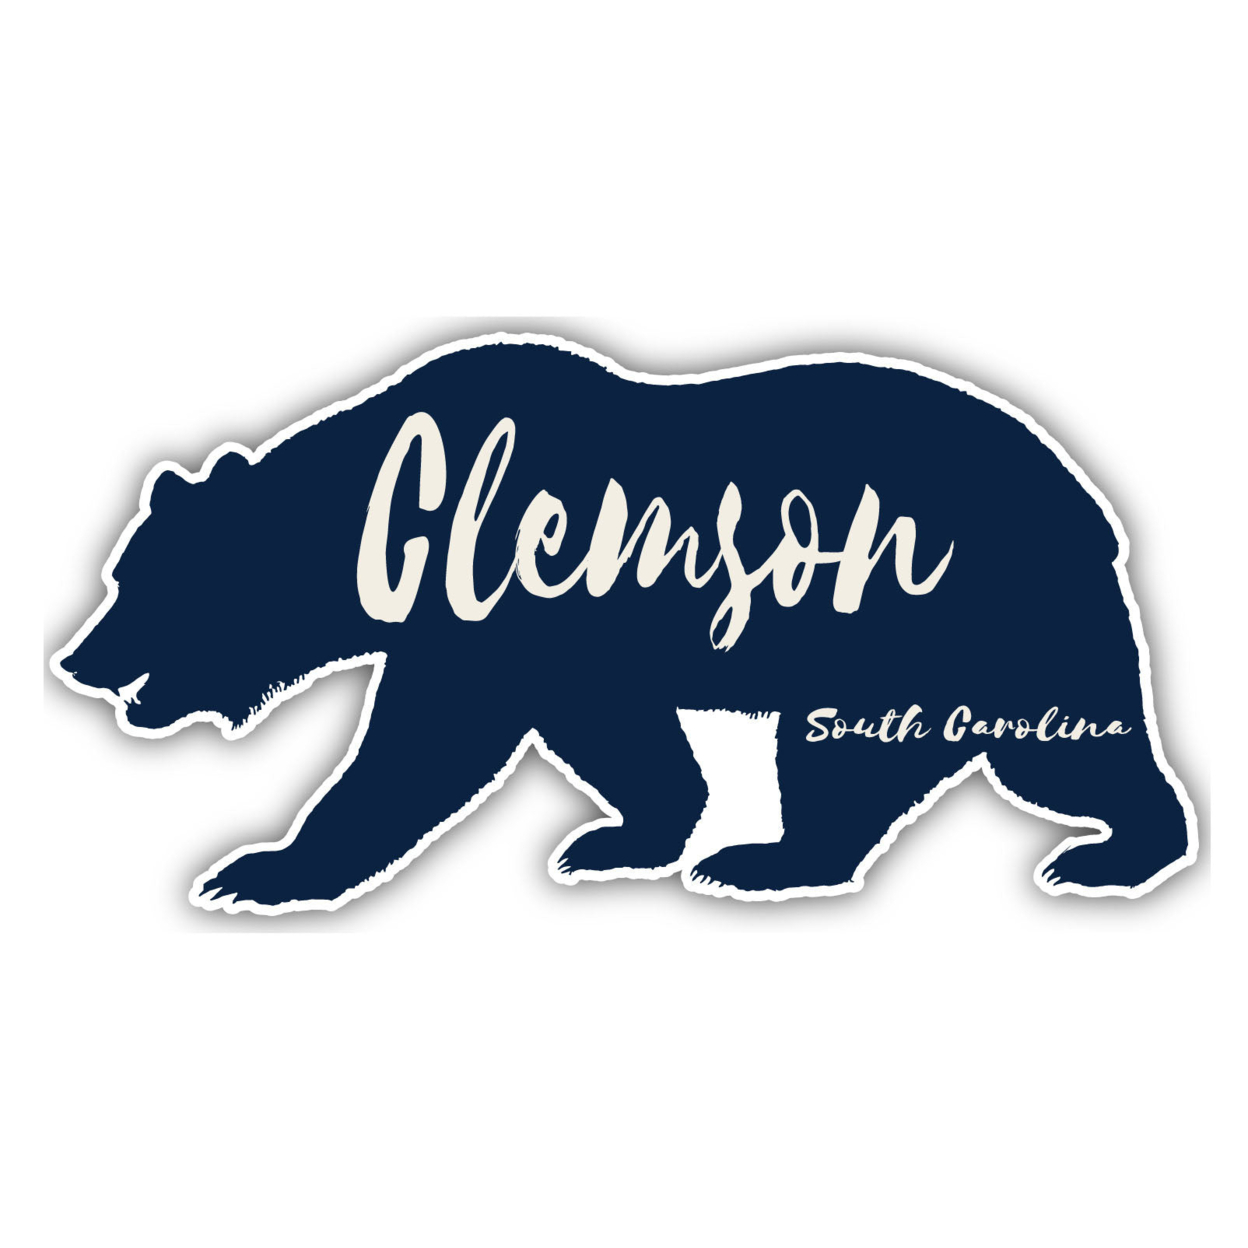 Clemson South Carolina Souvenir Decorative Stickers (Choose Theme And Size) - 4-Pack, 12-Inch, Tent